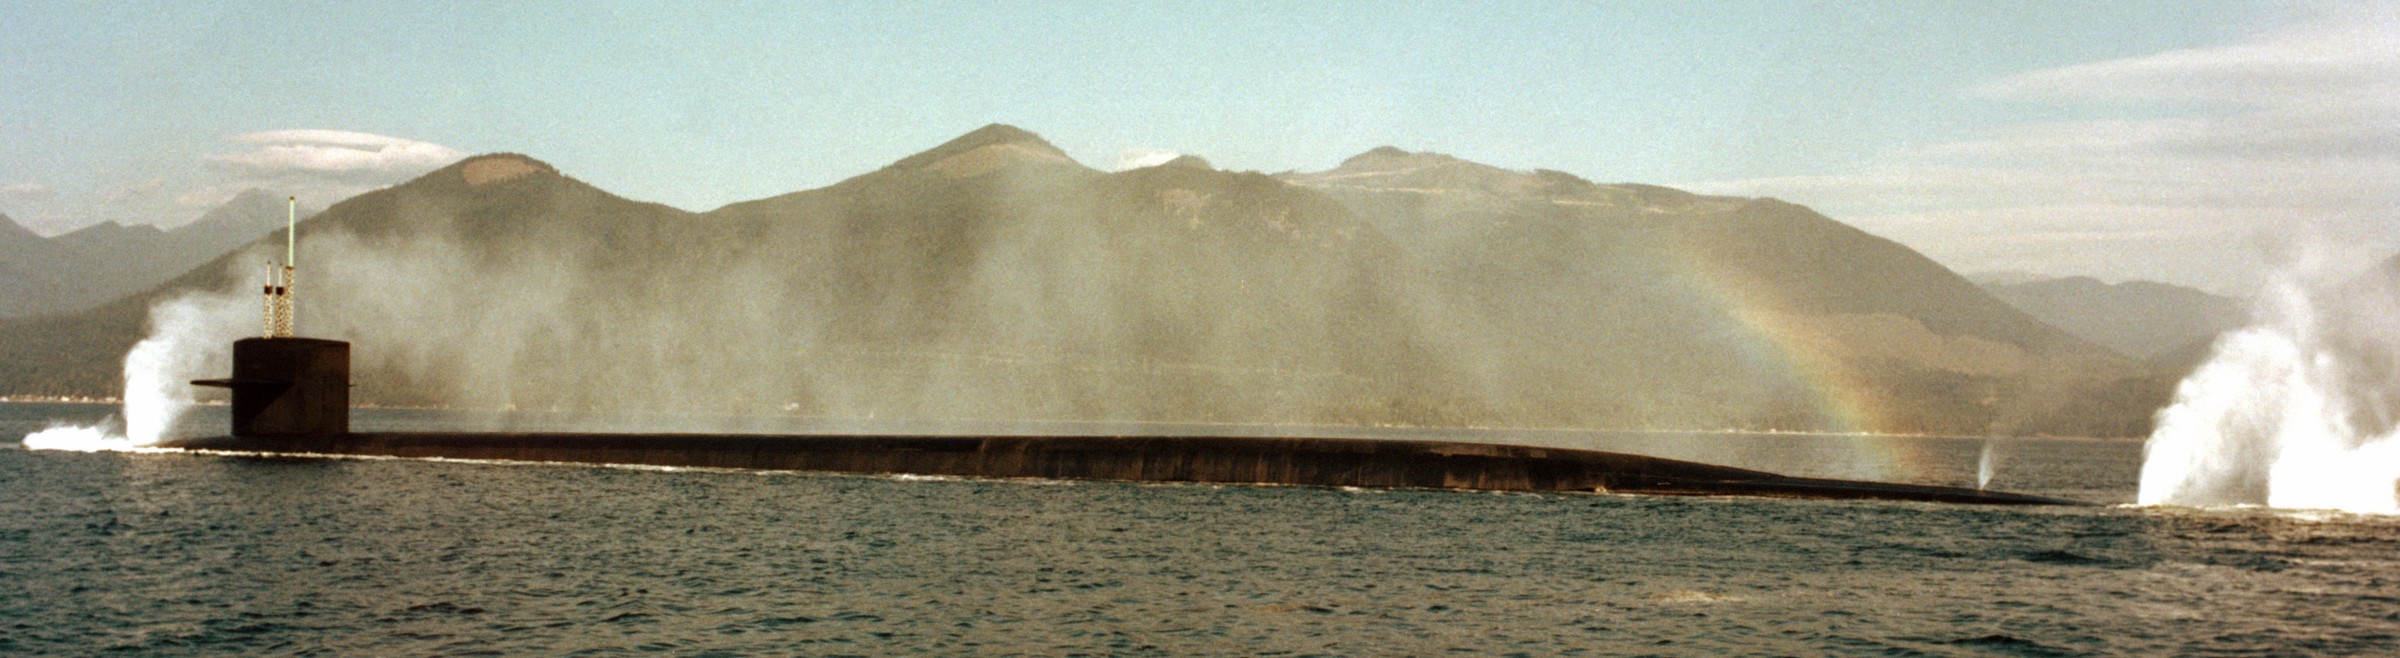 ssbn-728 uss florida ballistic missile submarine us navy 1985 64